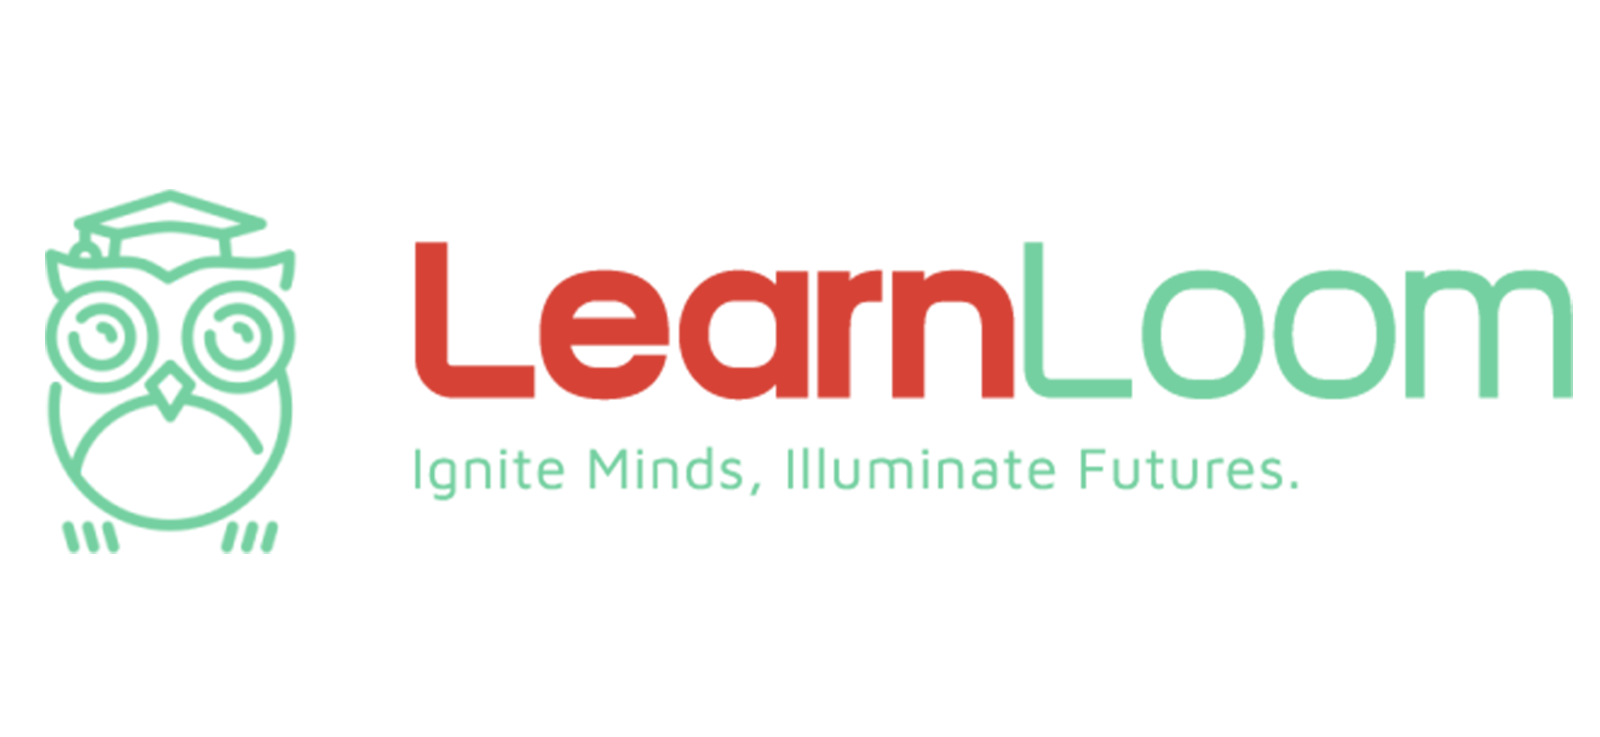 LearnLoom